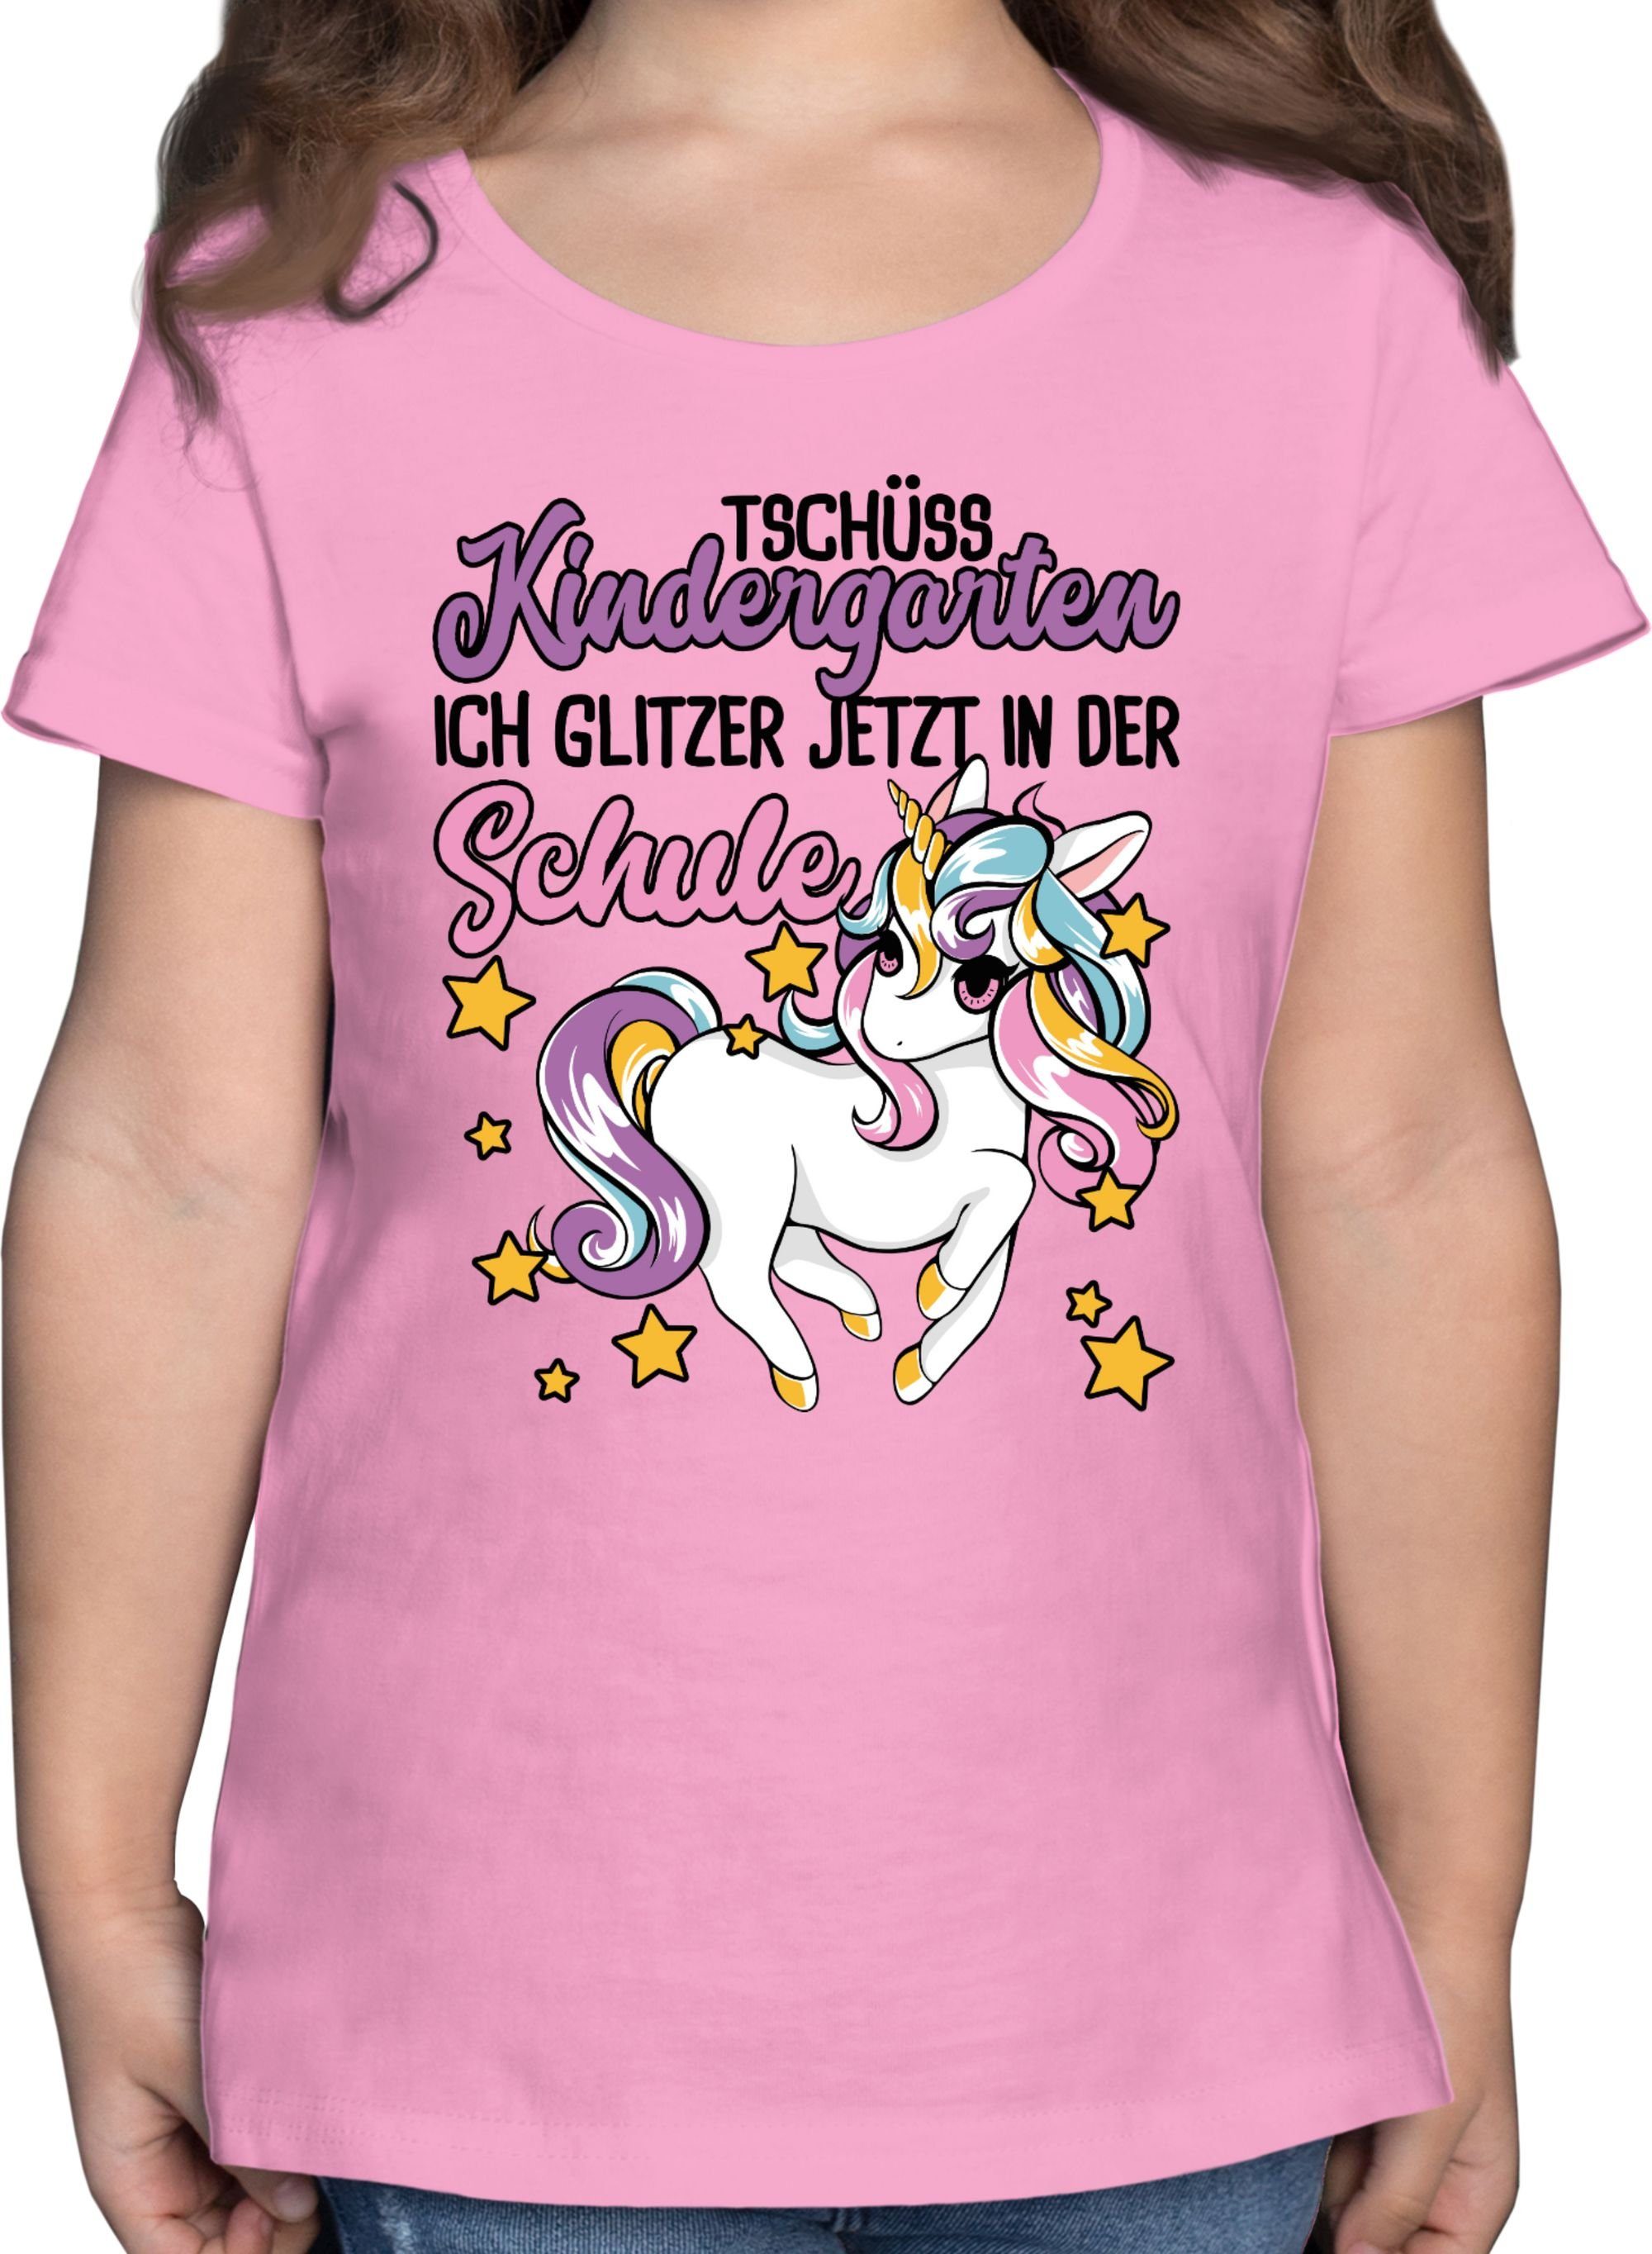 Shirtracer T-Shirt Tschüss Kindergarten Einhorn - Glitzer jetzt in der Schule Einschulung Mädchen 3 Rosa